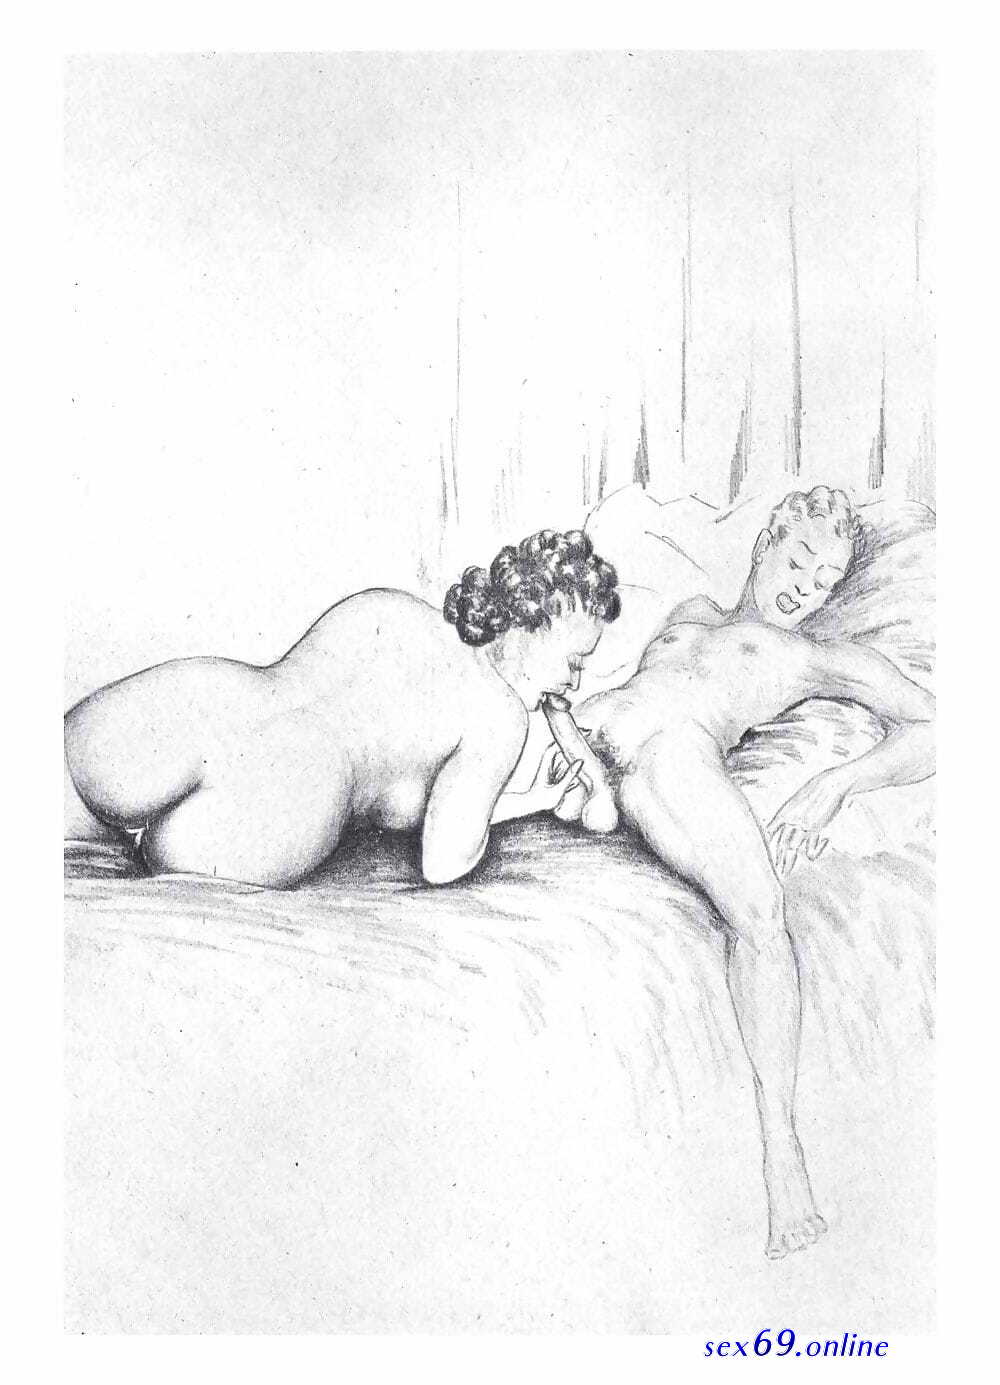 Strawberry Incest Art Porn - incest retro drawing galleries.net - Sexy photos